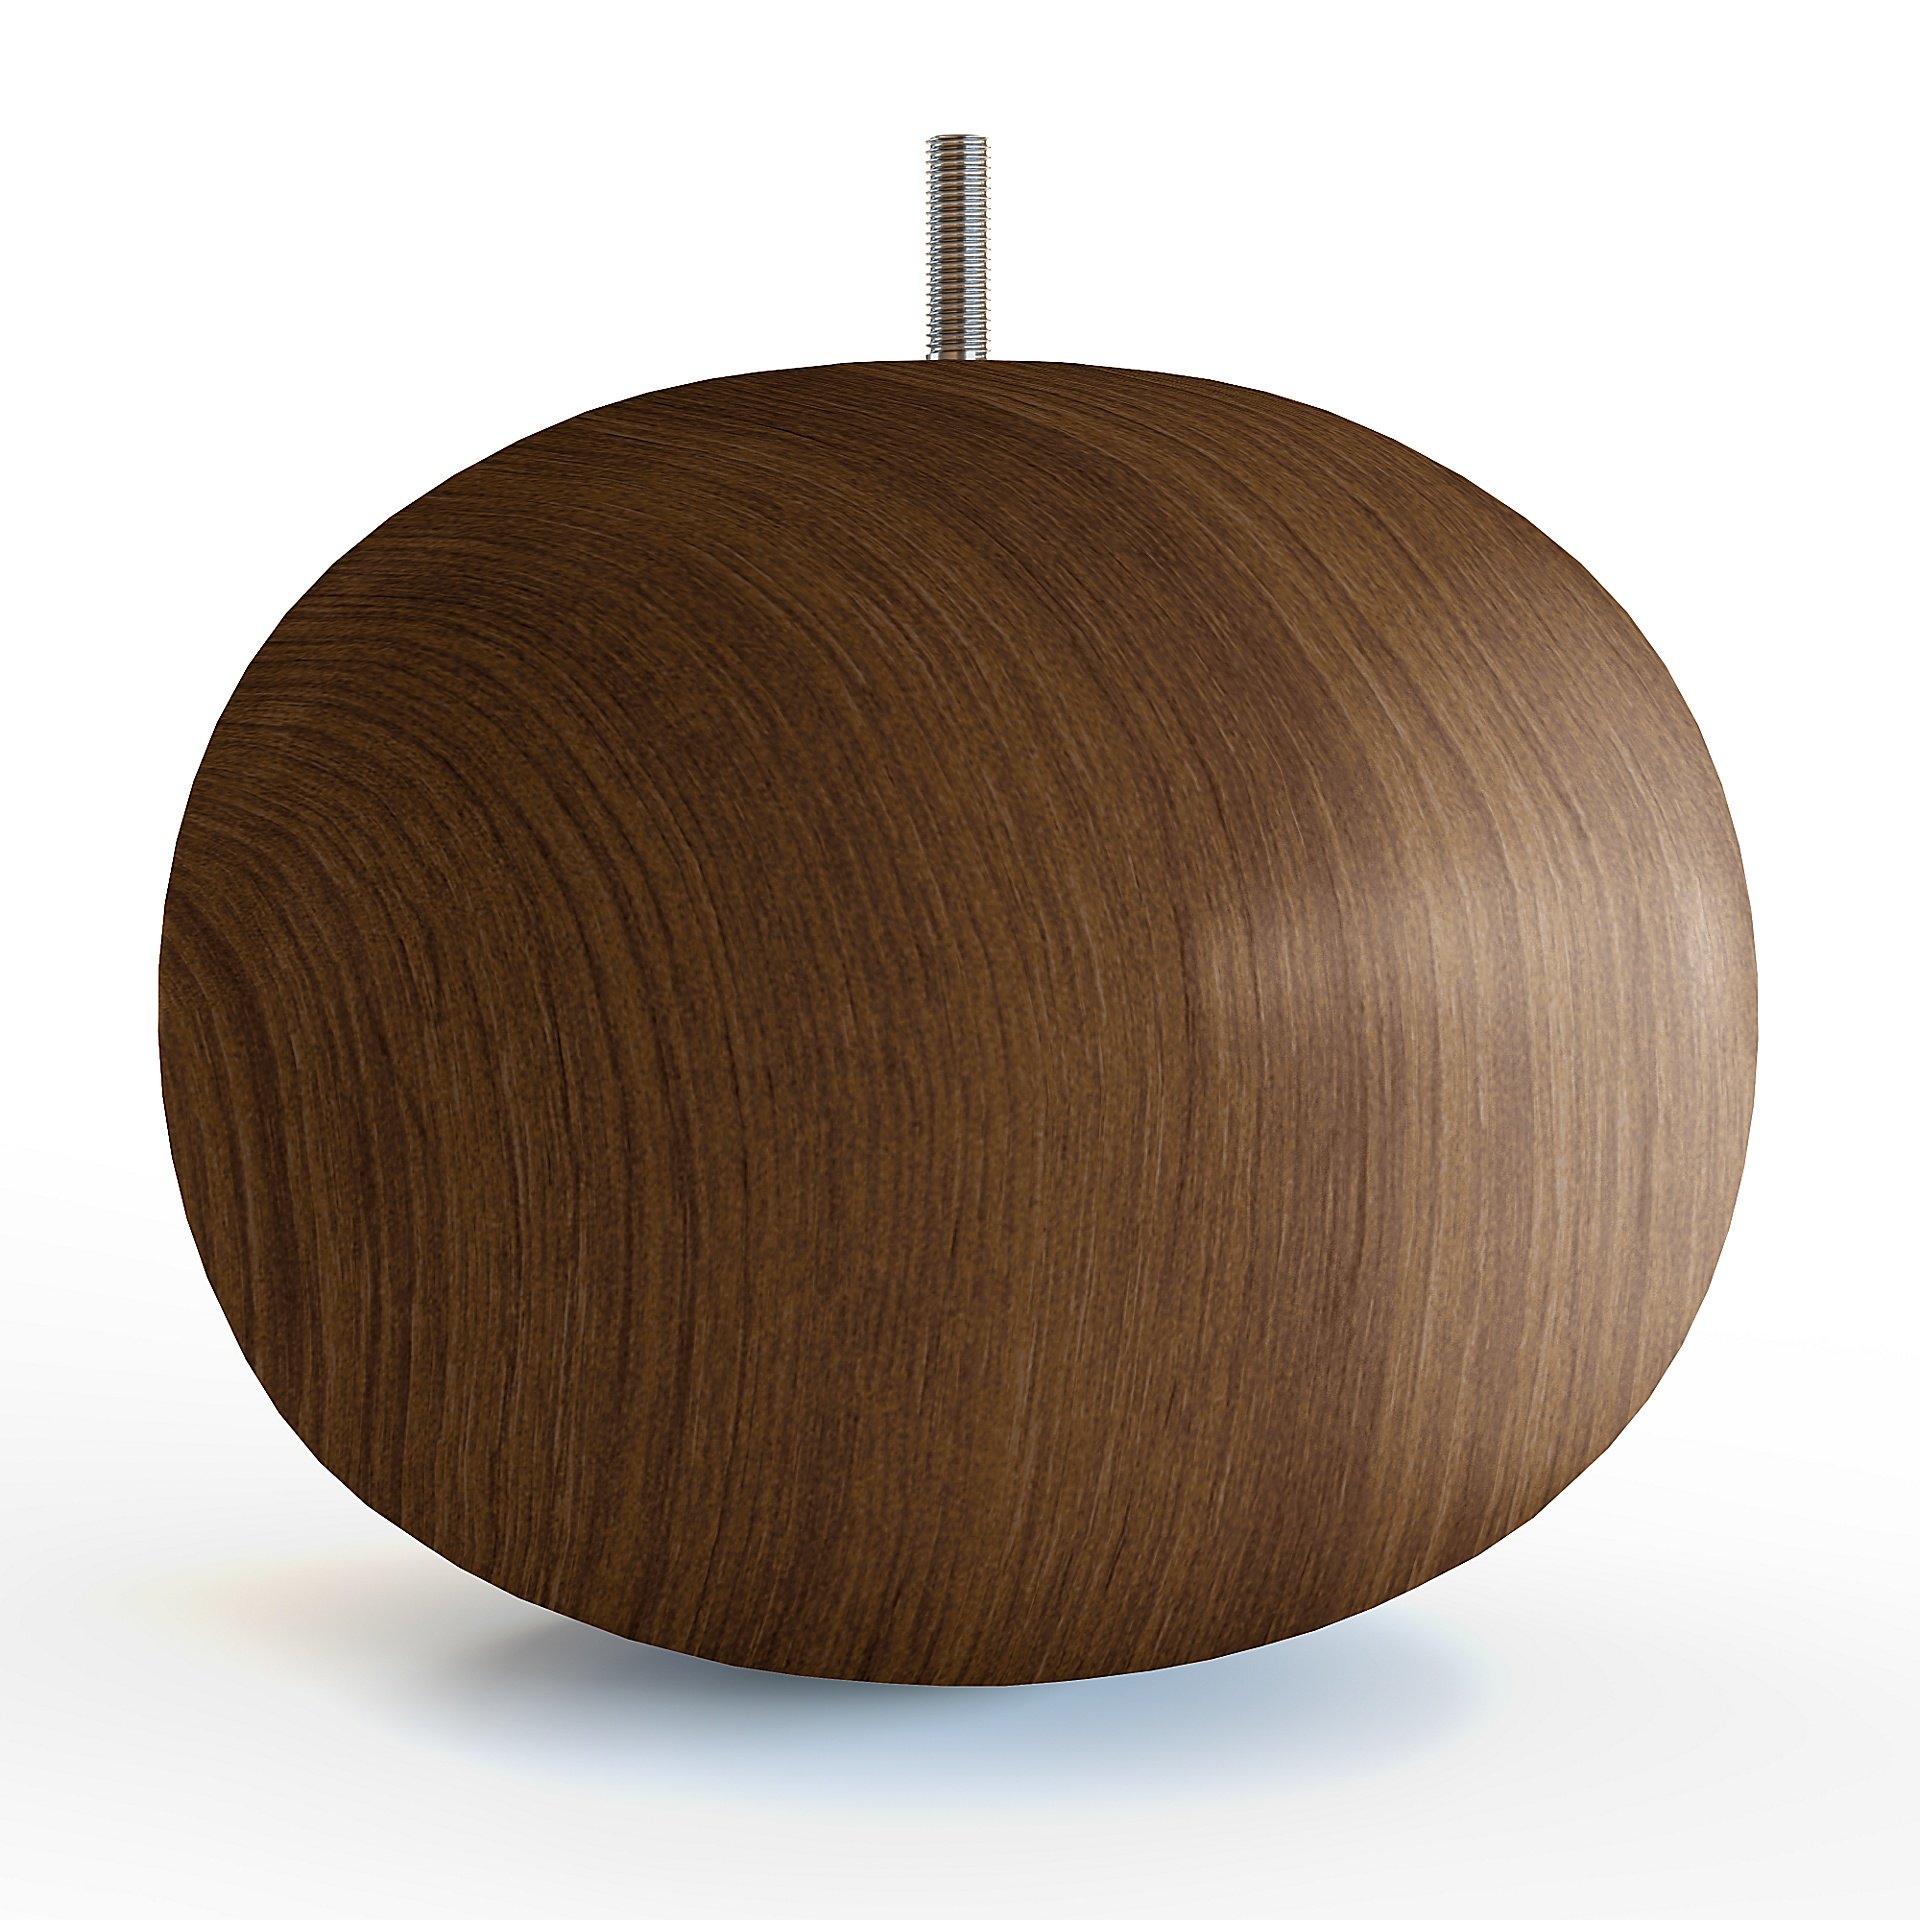 Märta ovalt möbelben i trä 7,5 cm - Walnut